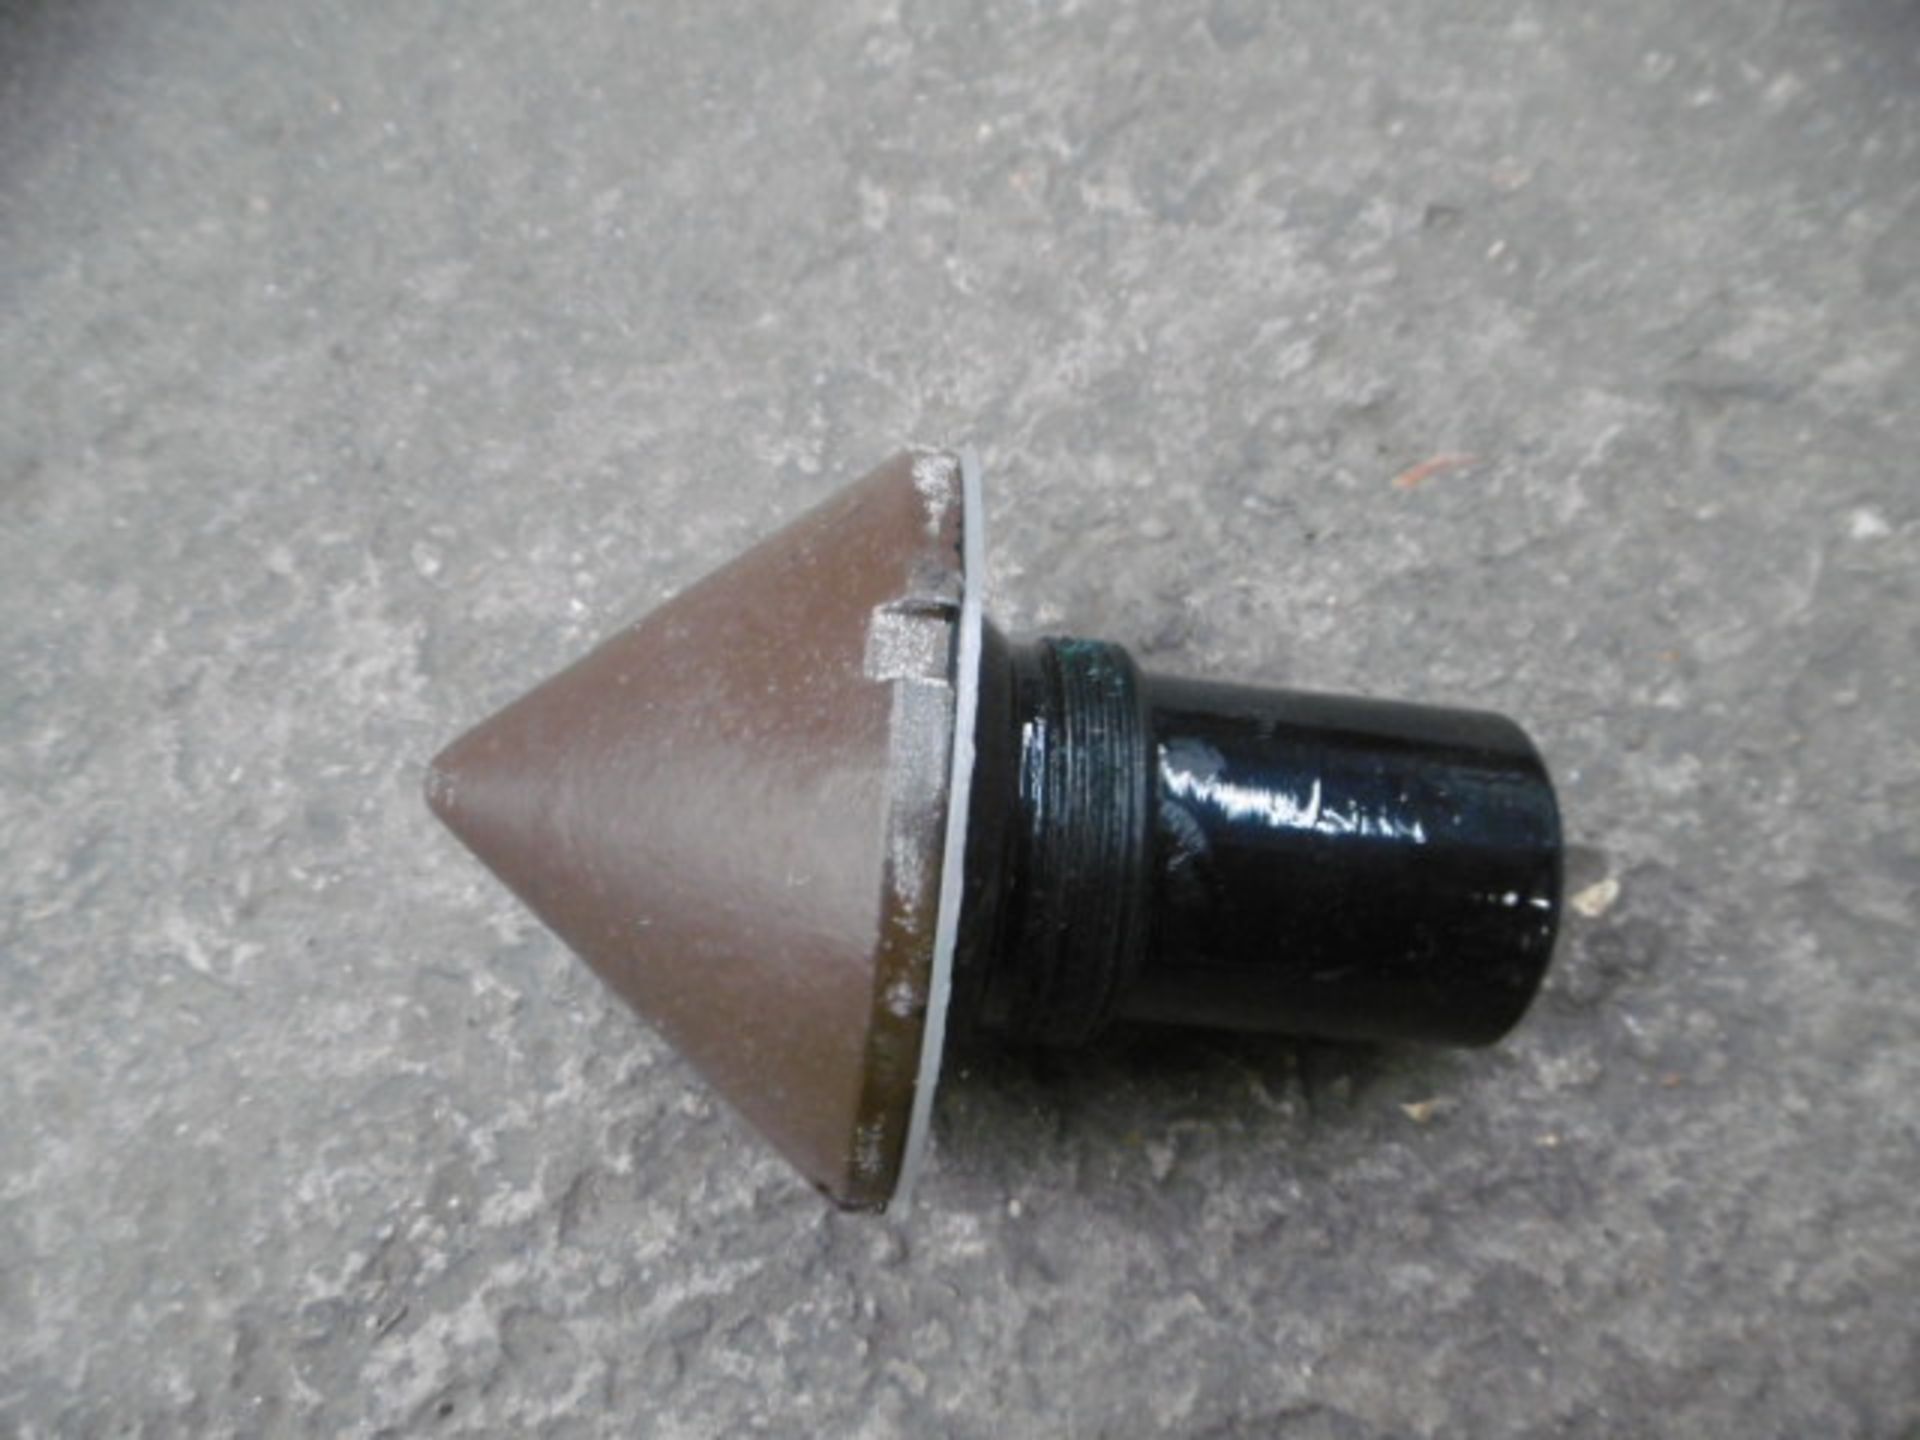 12 x No. 59 A/C Bomb Nose Plugs - Image 4 of 8